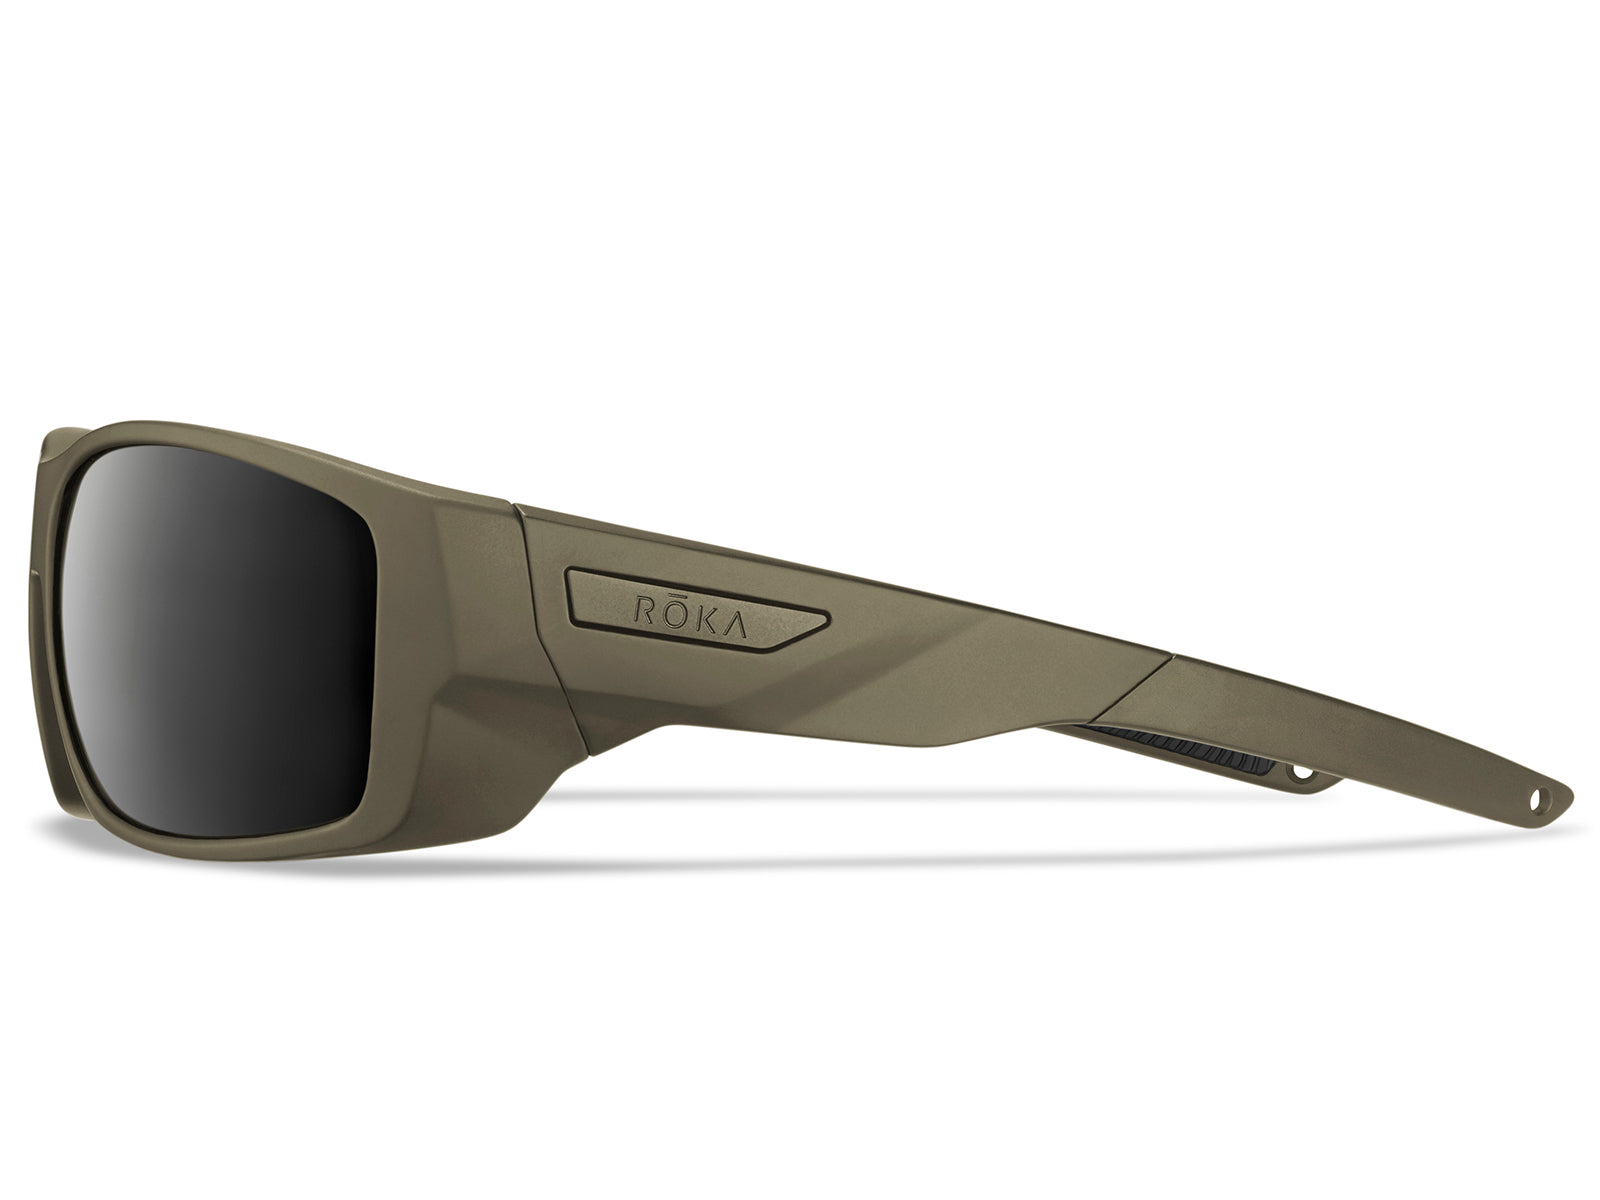 AT-1 Tactical Sunglasses, Lightweight All-Terrain Sunglasses